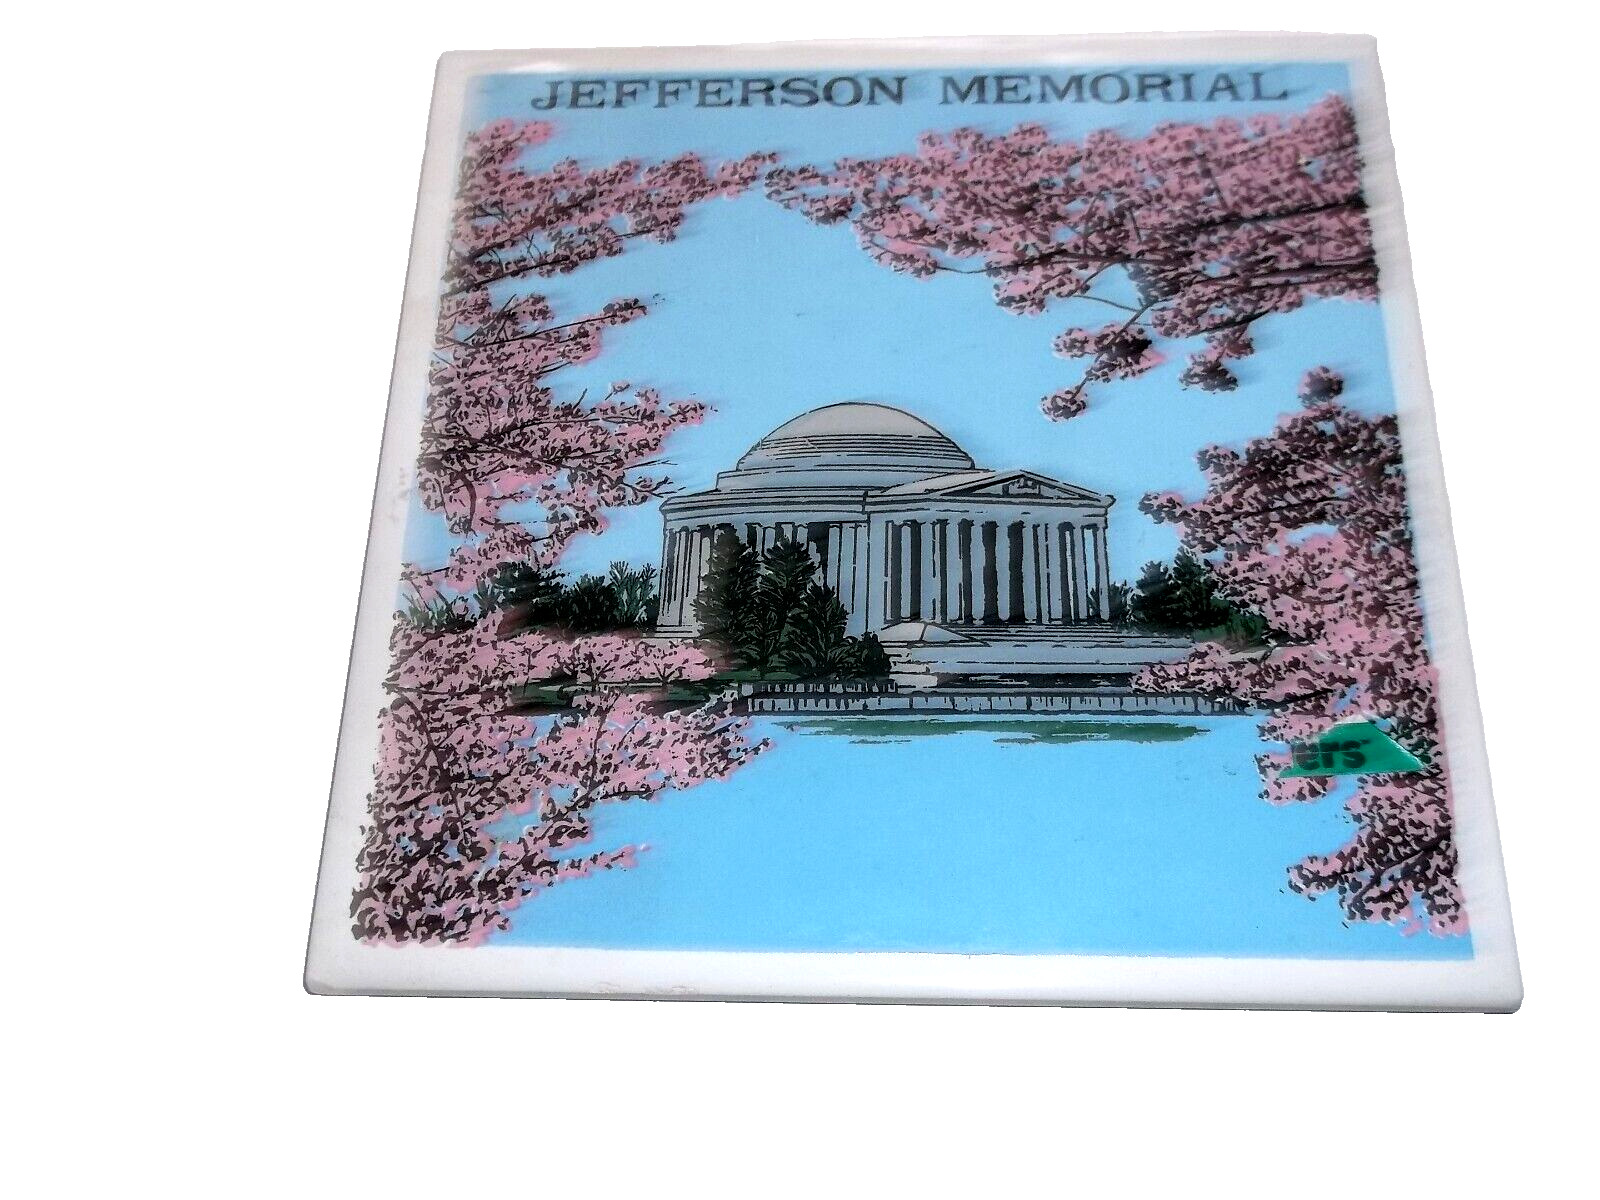 JEFFERSON MEMORIAL DECORATIVE CERAMIC TILE/TRIVET 6X6 CORK BLUE BACKGROUND 